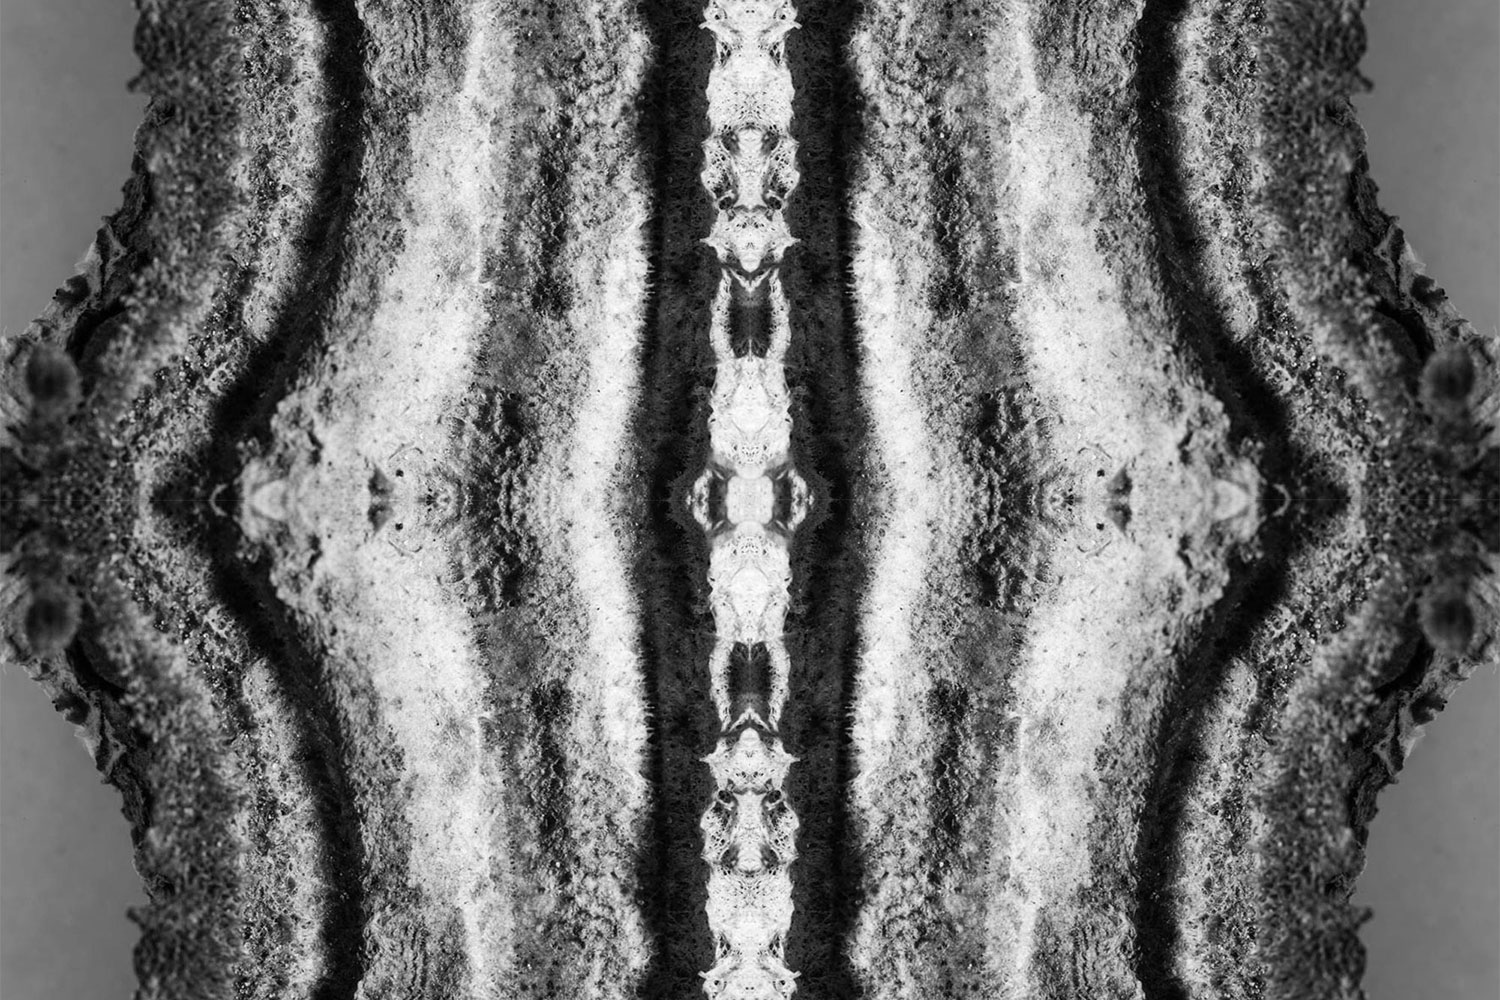 Symmetrical patterns using a reishi mushroom.